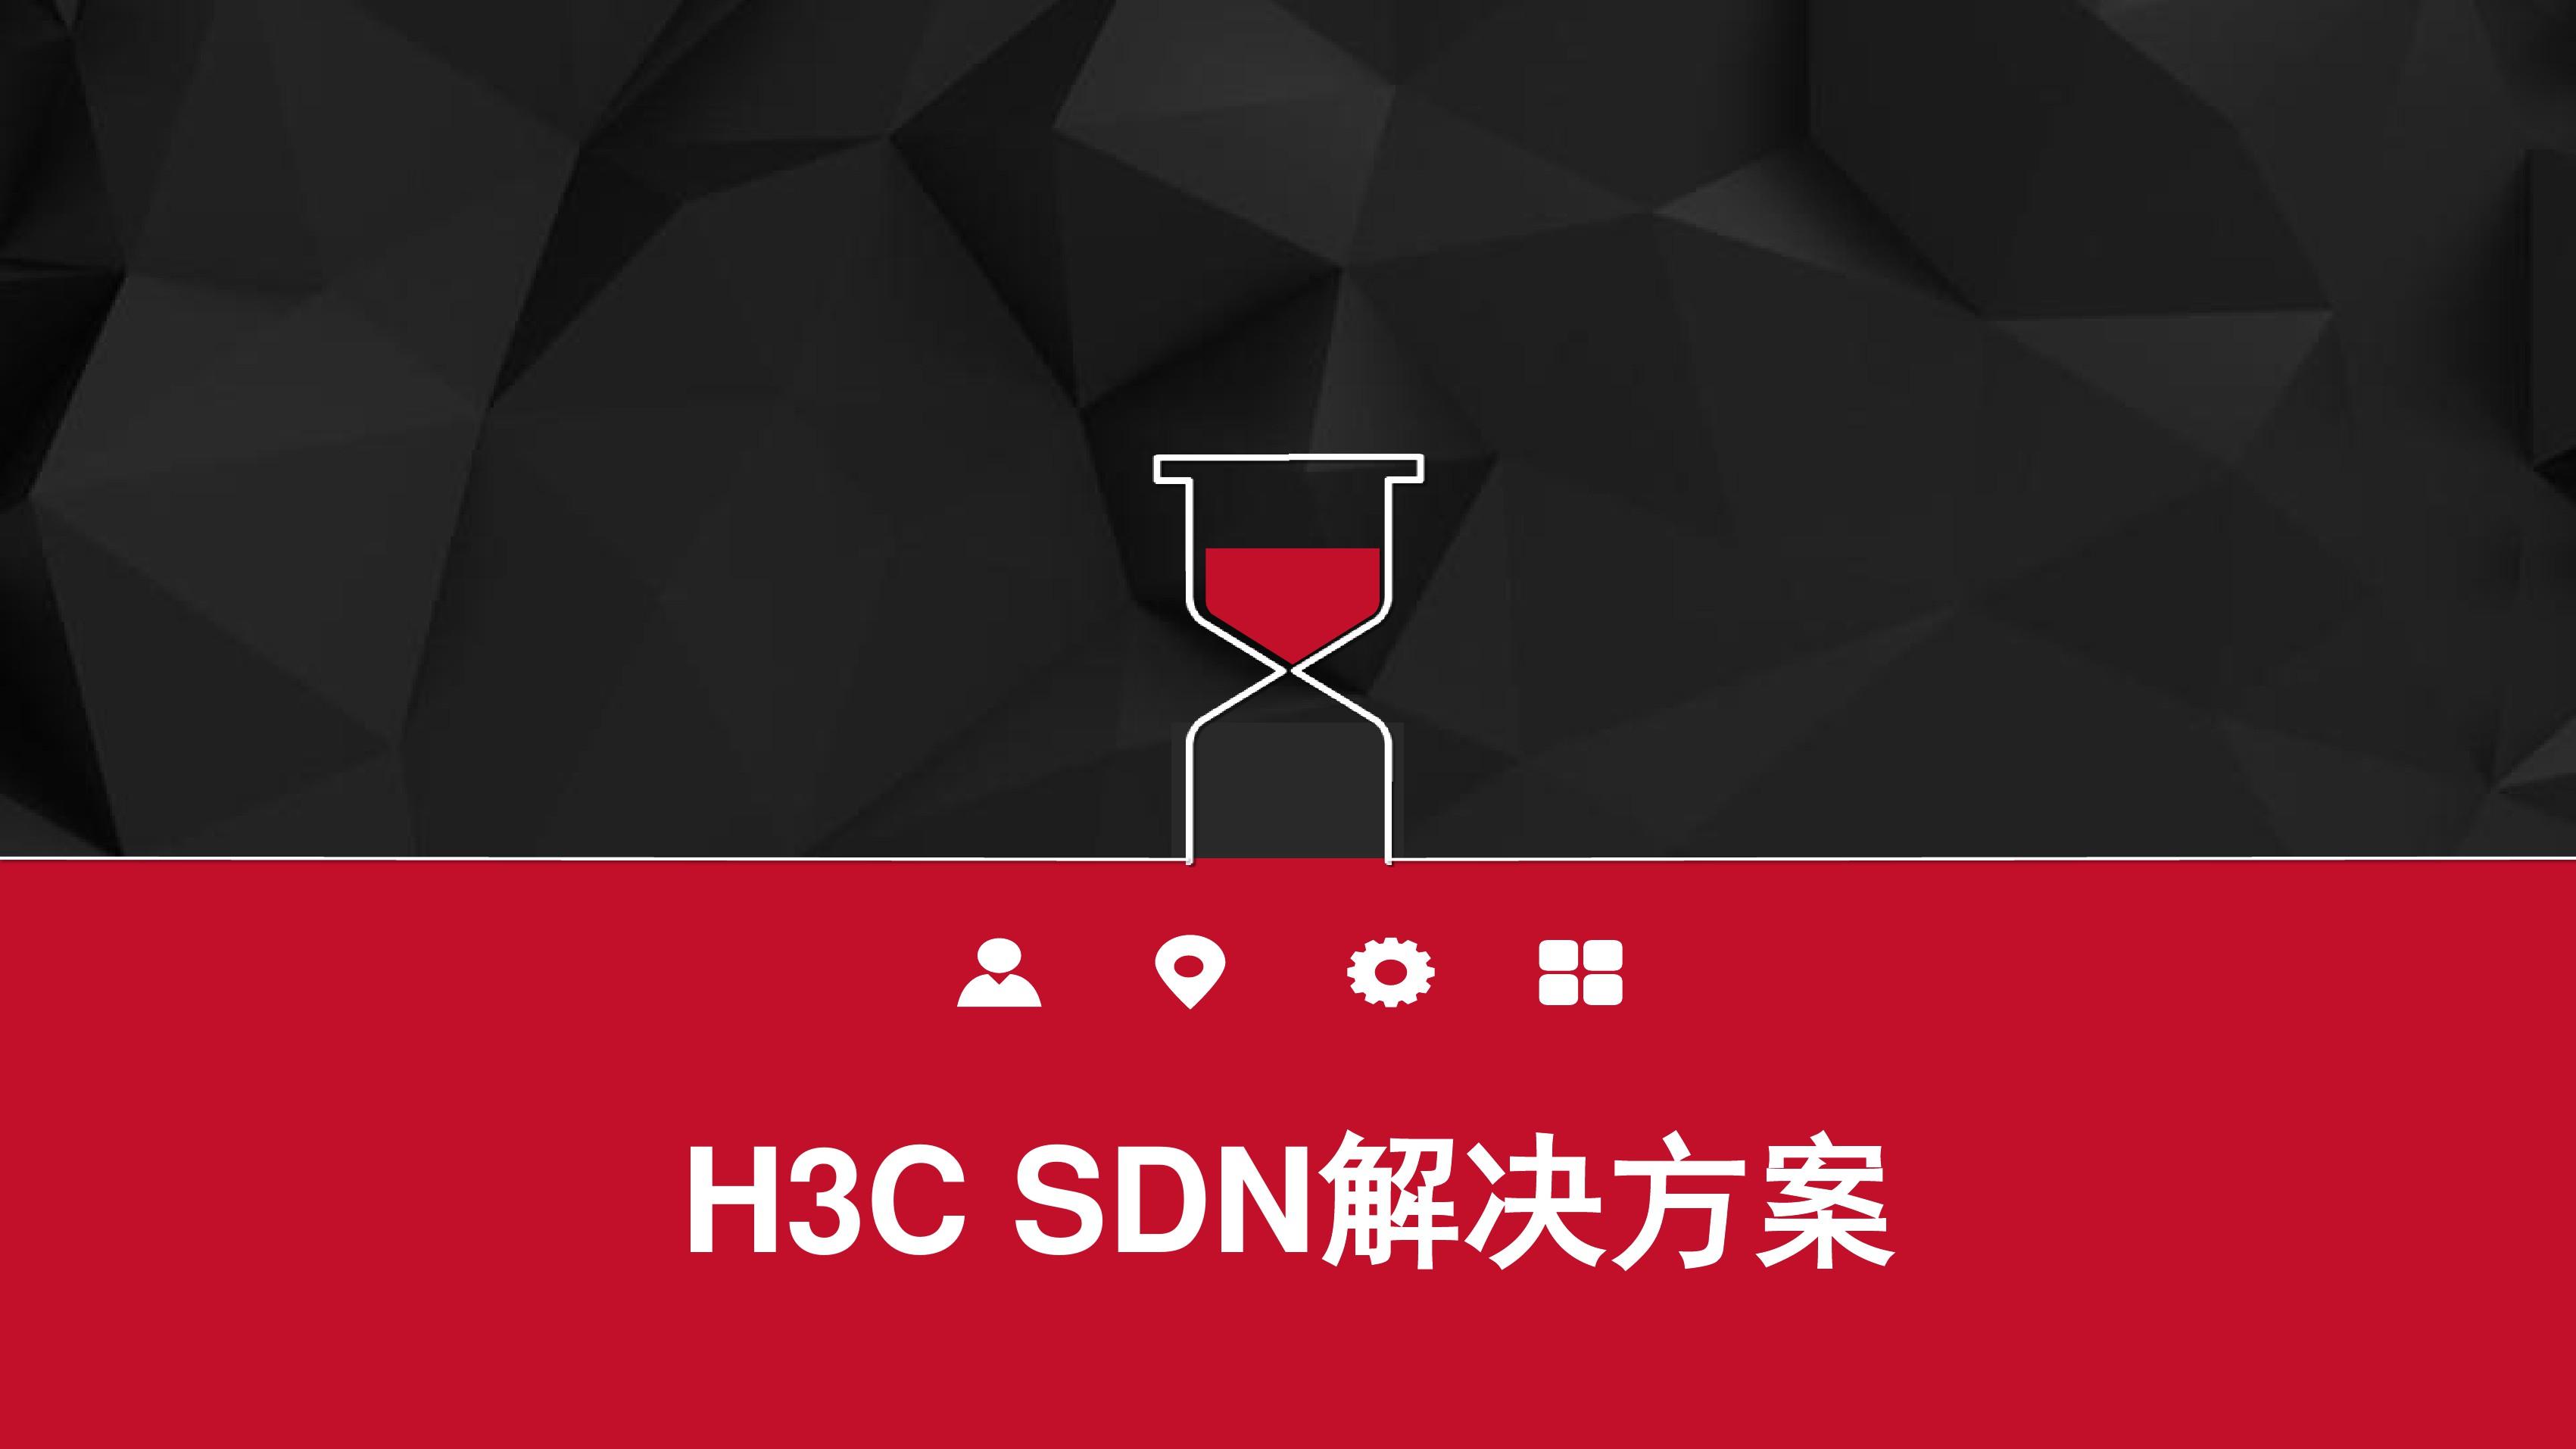 H3C SDN解决方案 PPT